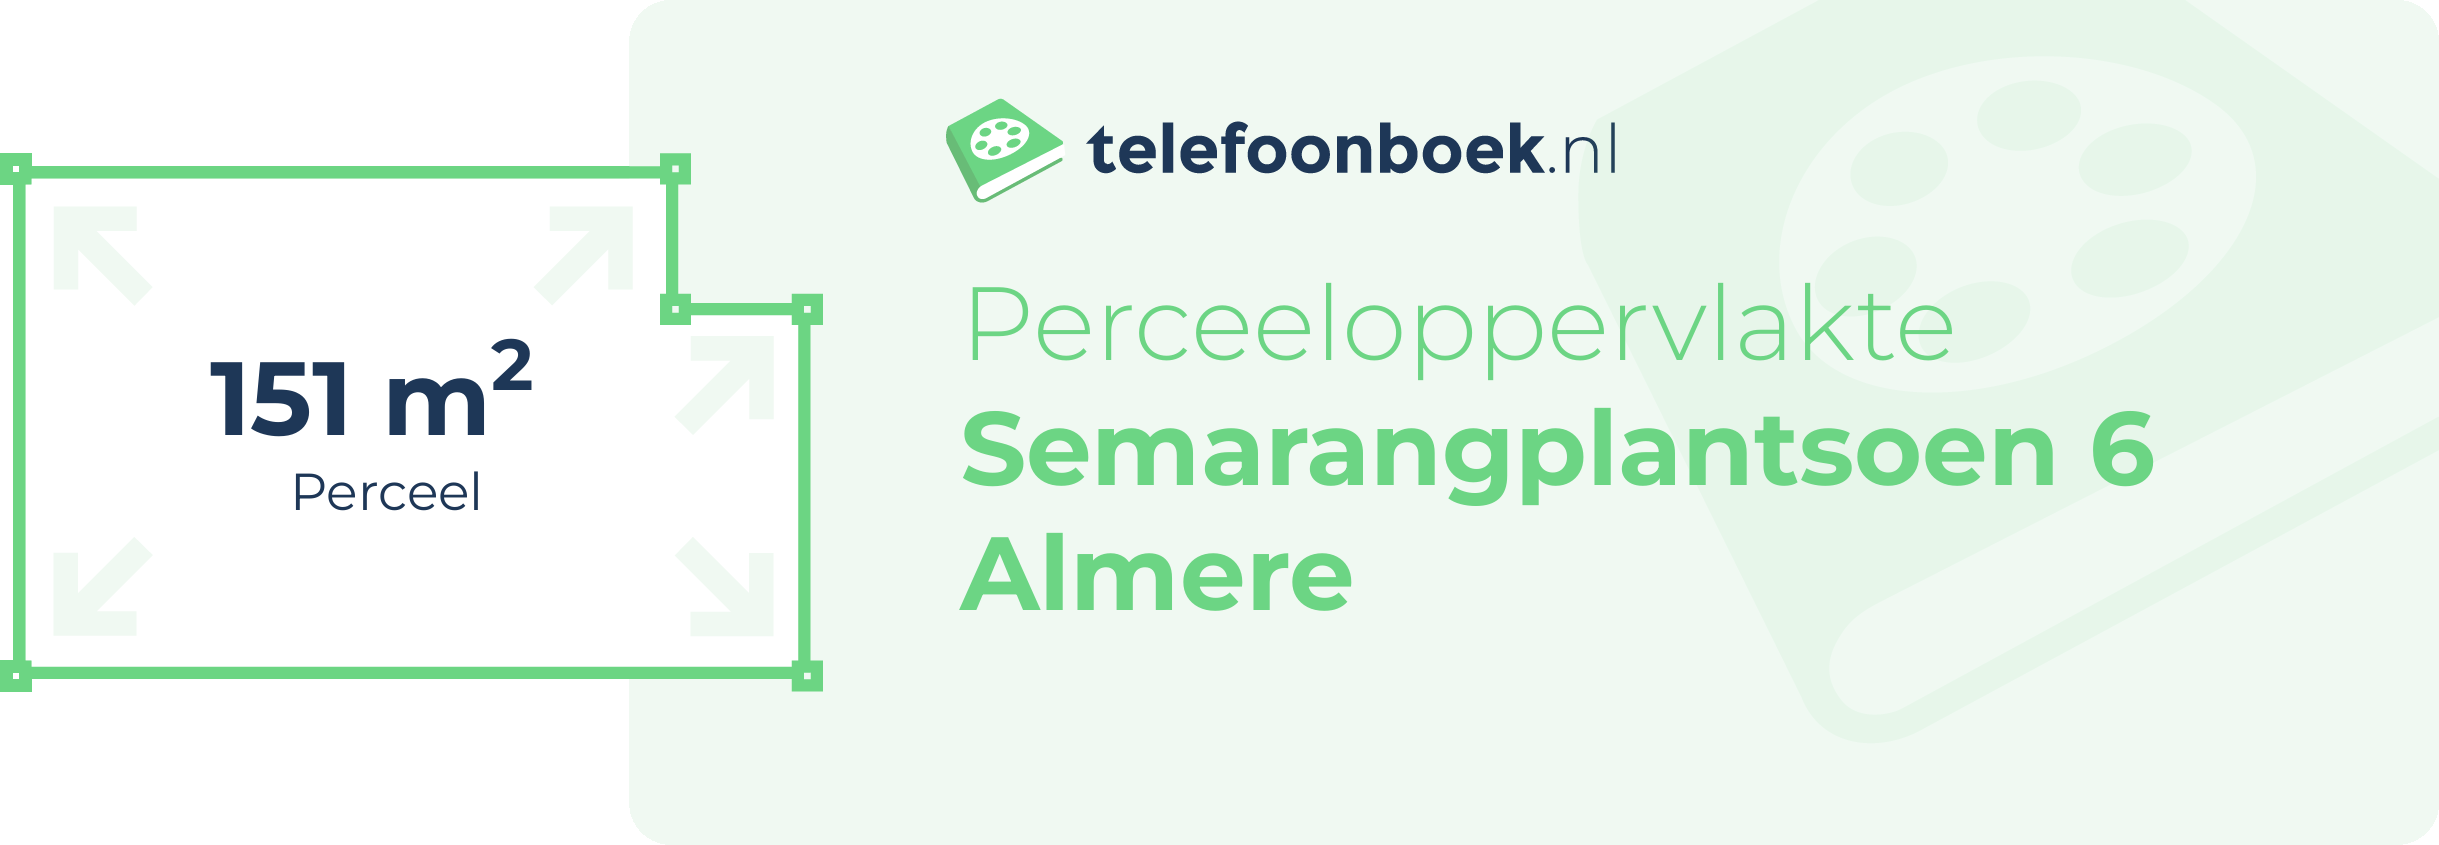 Perceeloppervlakte Semarangplantsoen 6 Almere